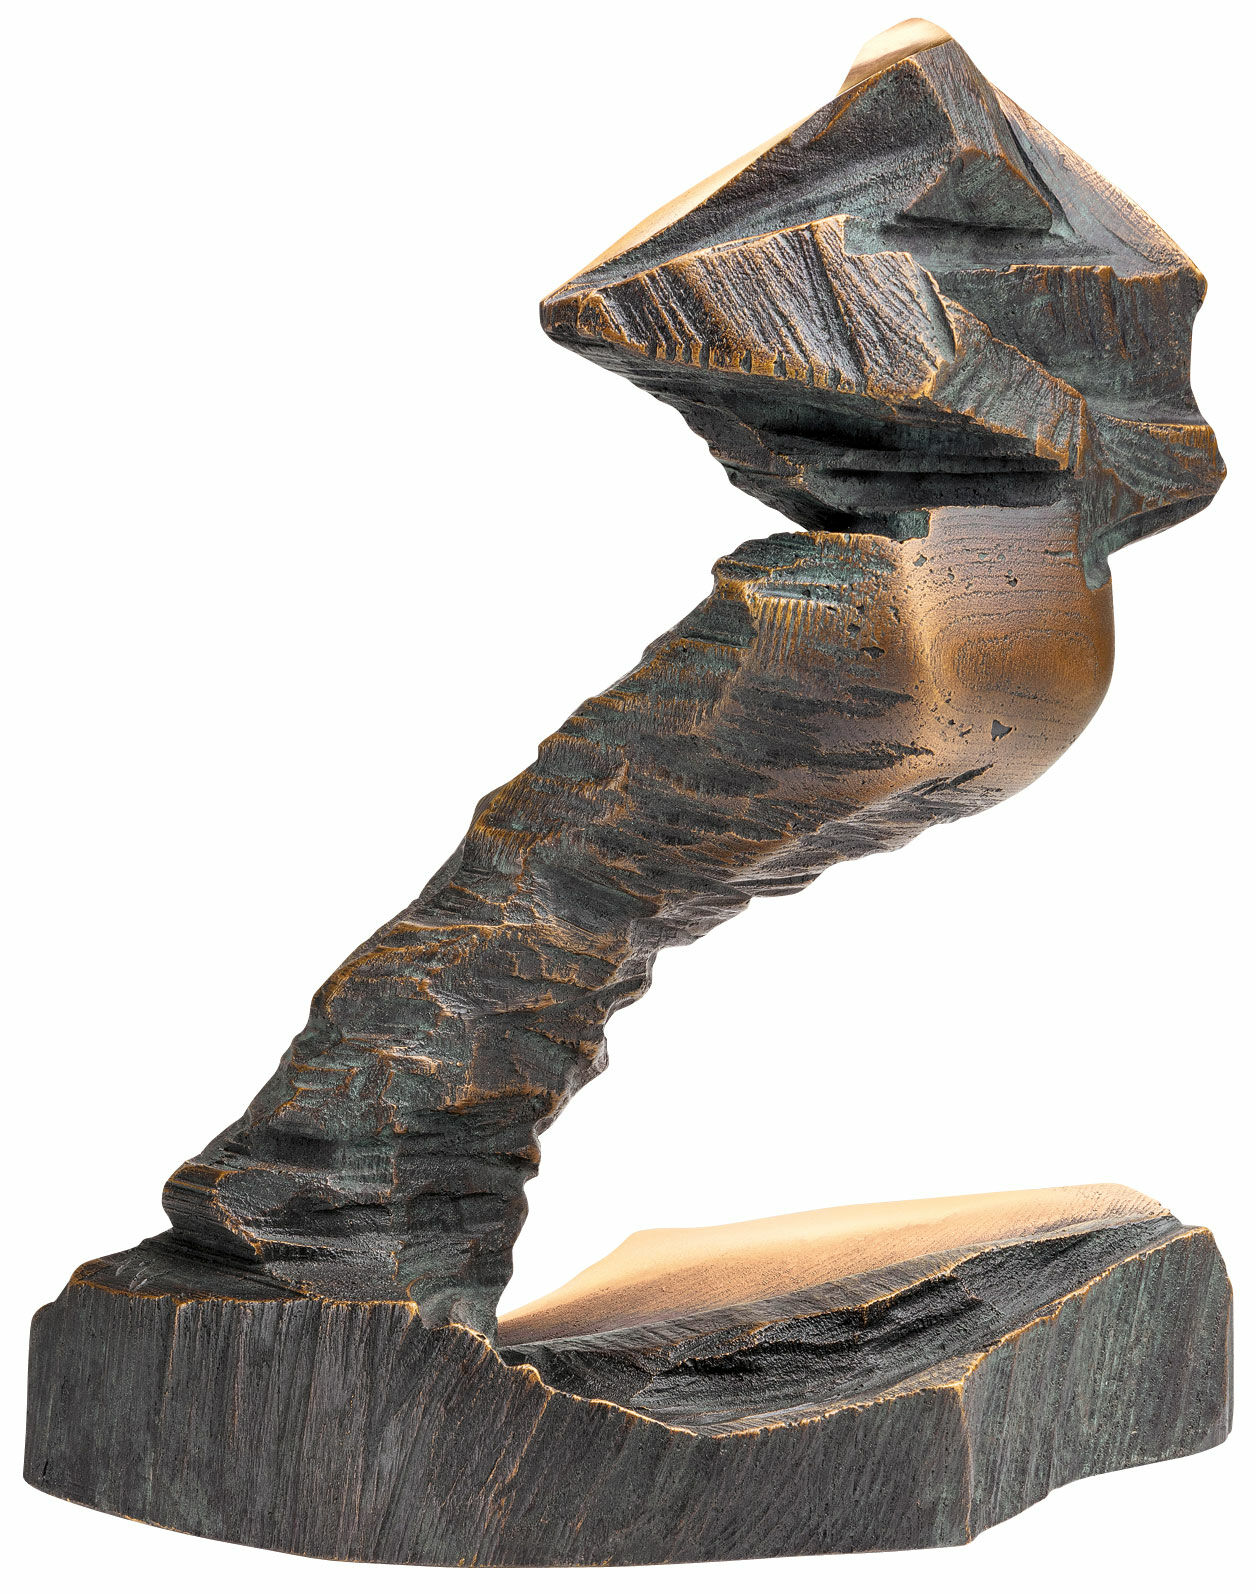 Sculpture "Super-G", bronze by Michael Vogler